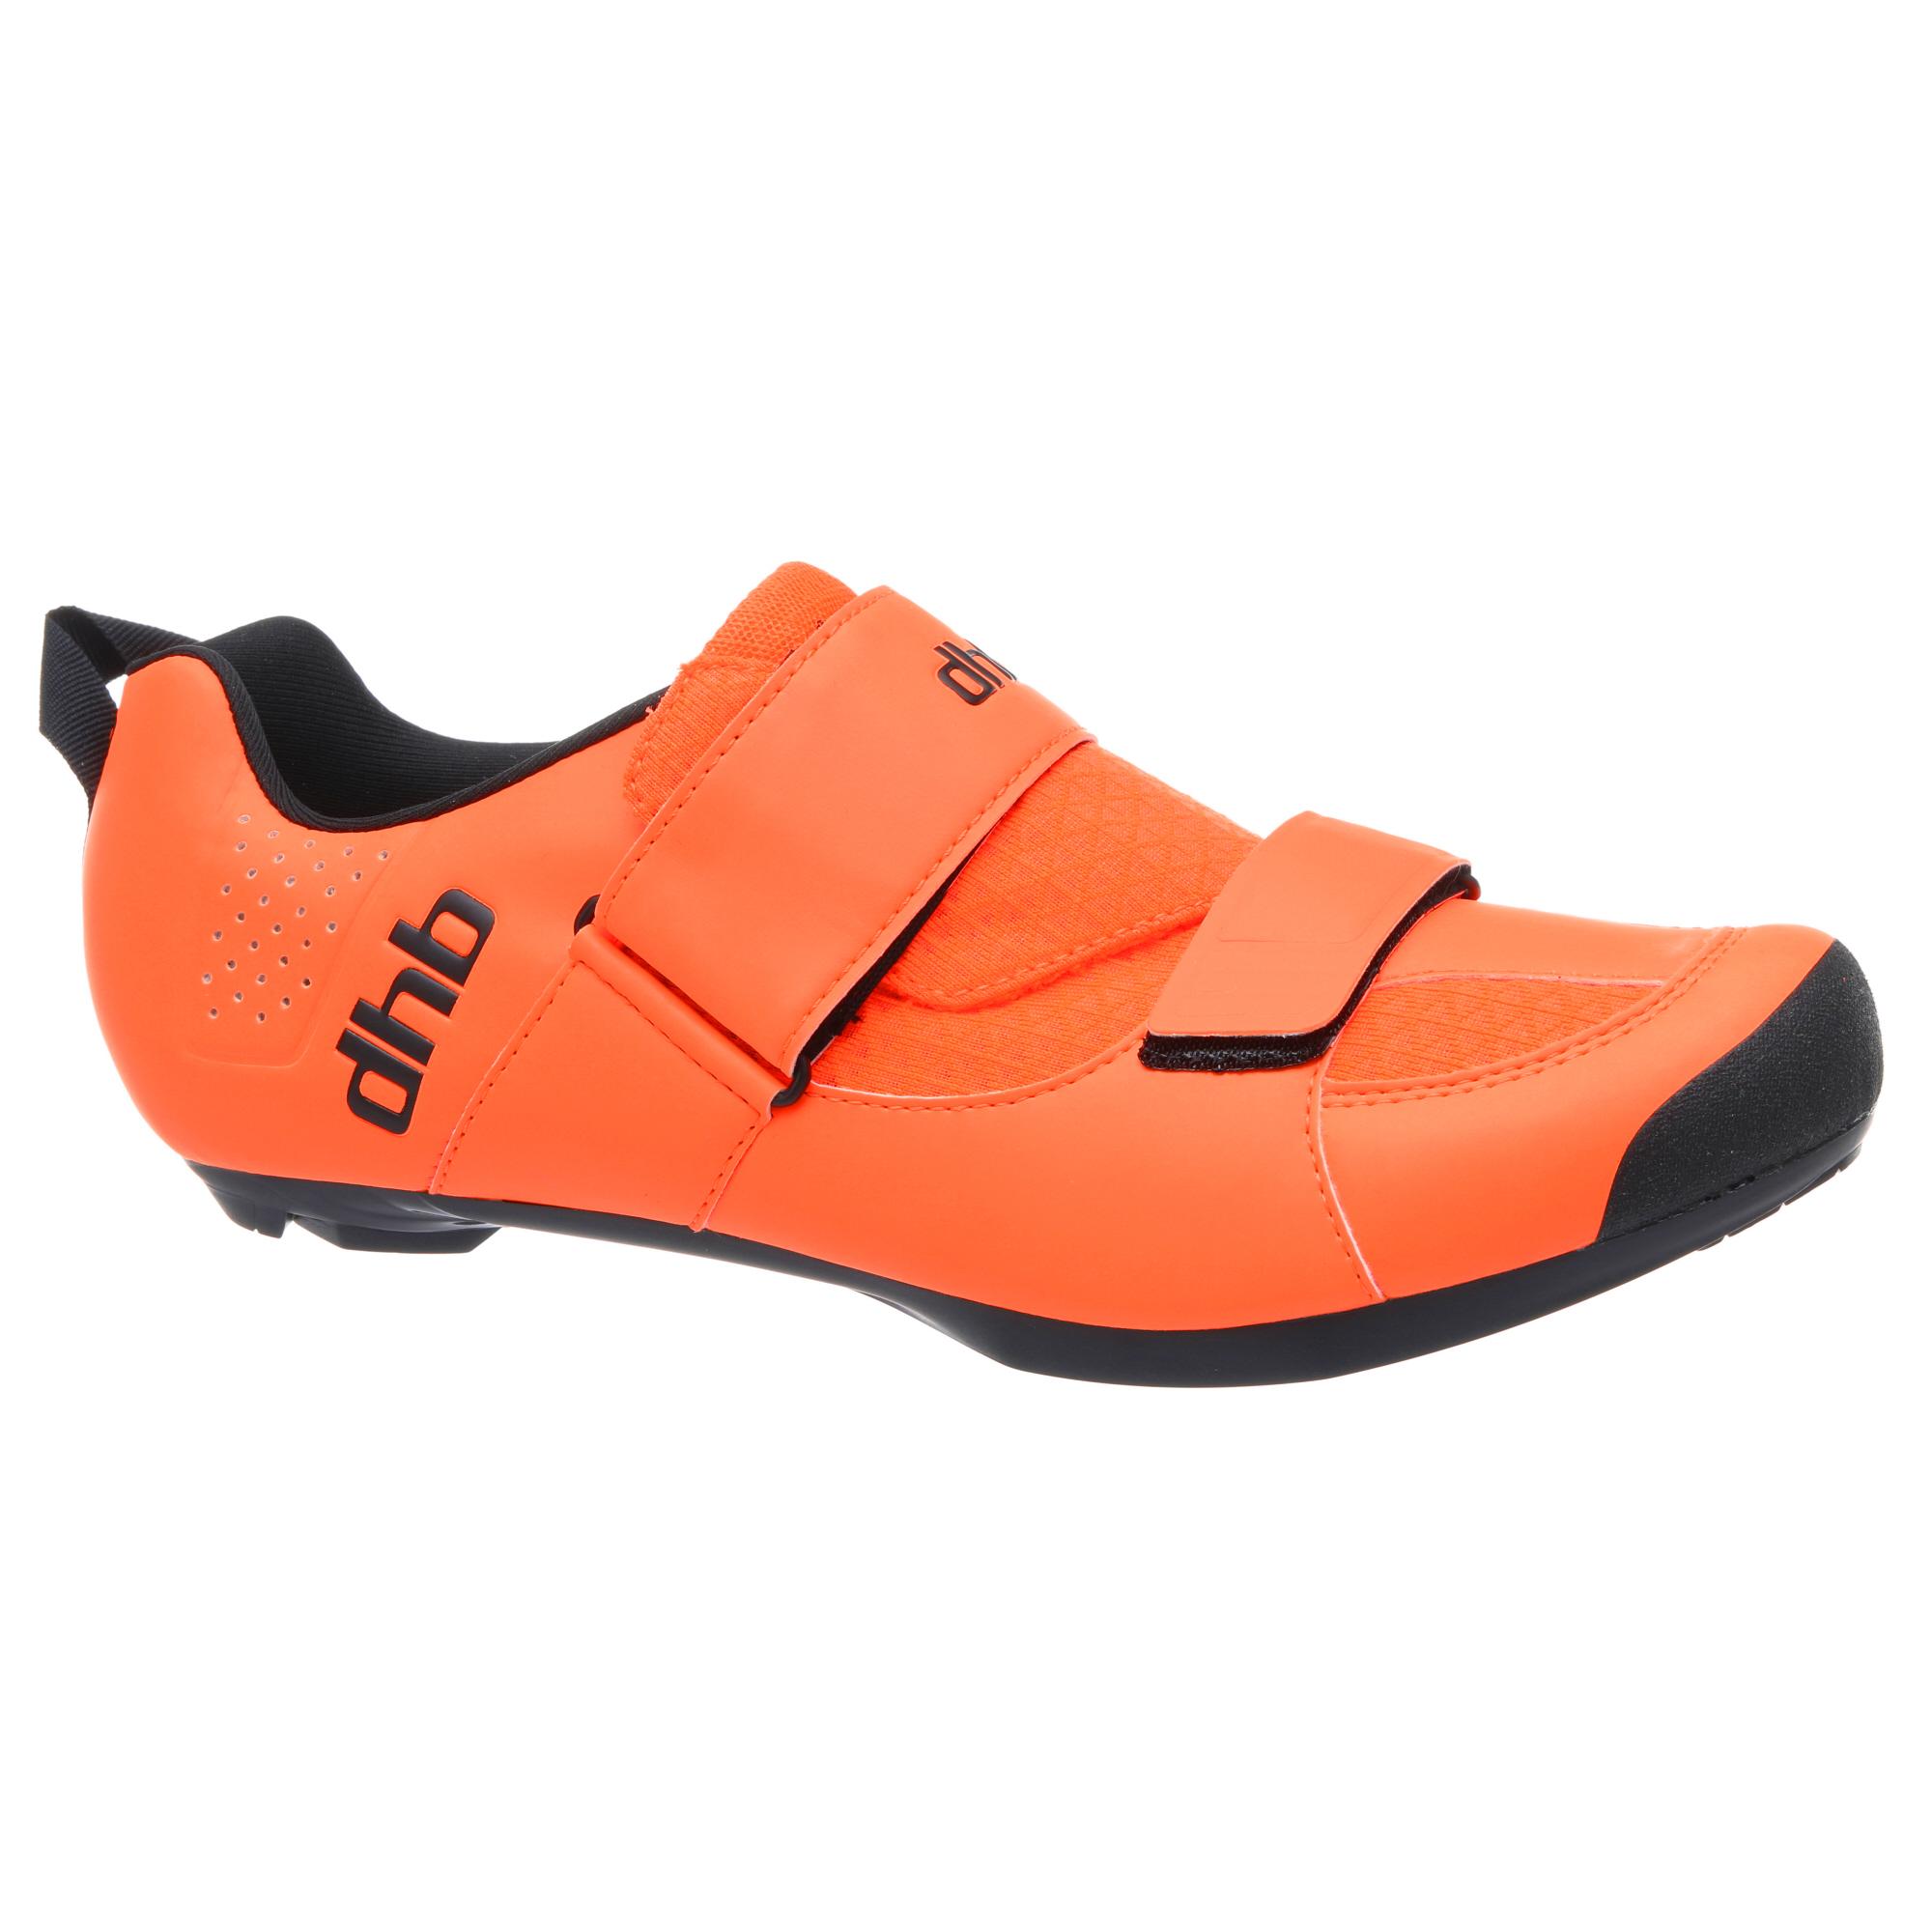 Dhb Trinity Tri Shoe - Orange